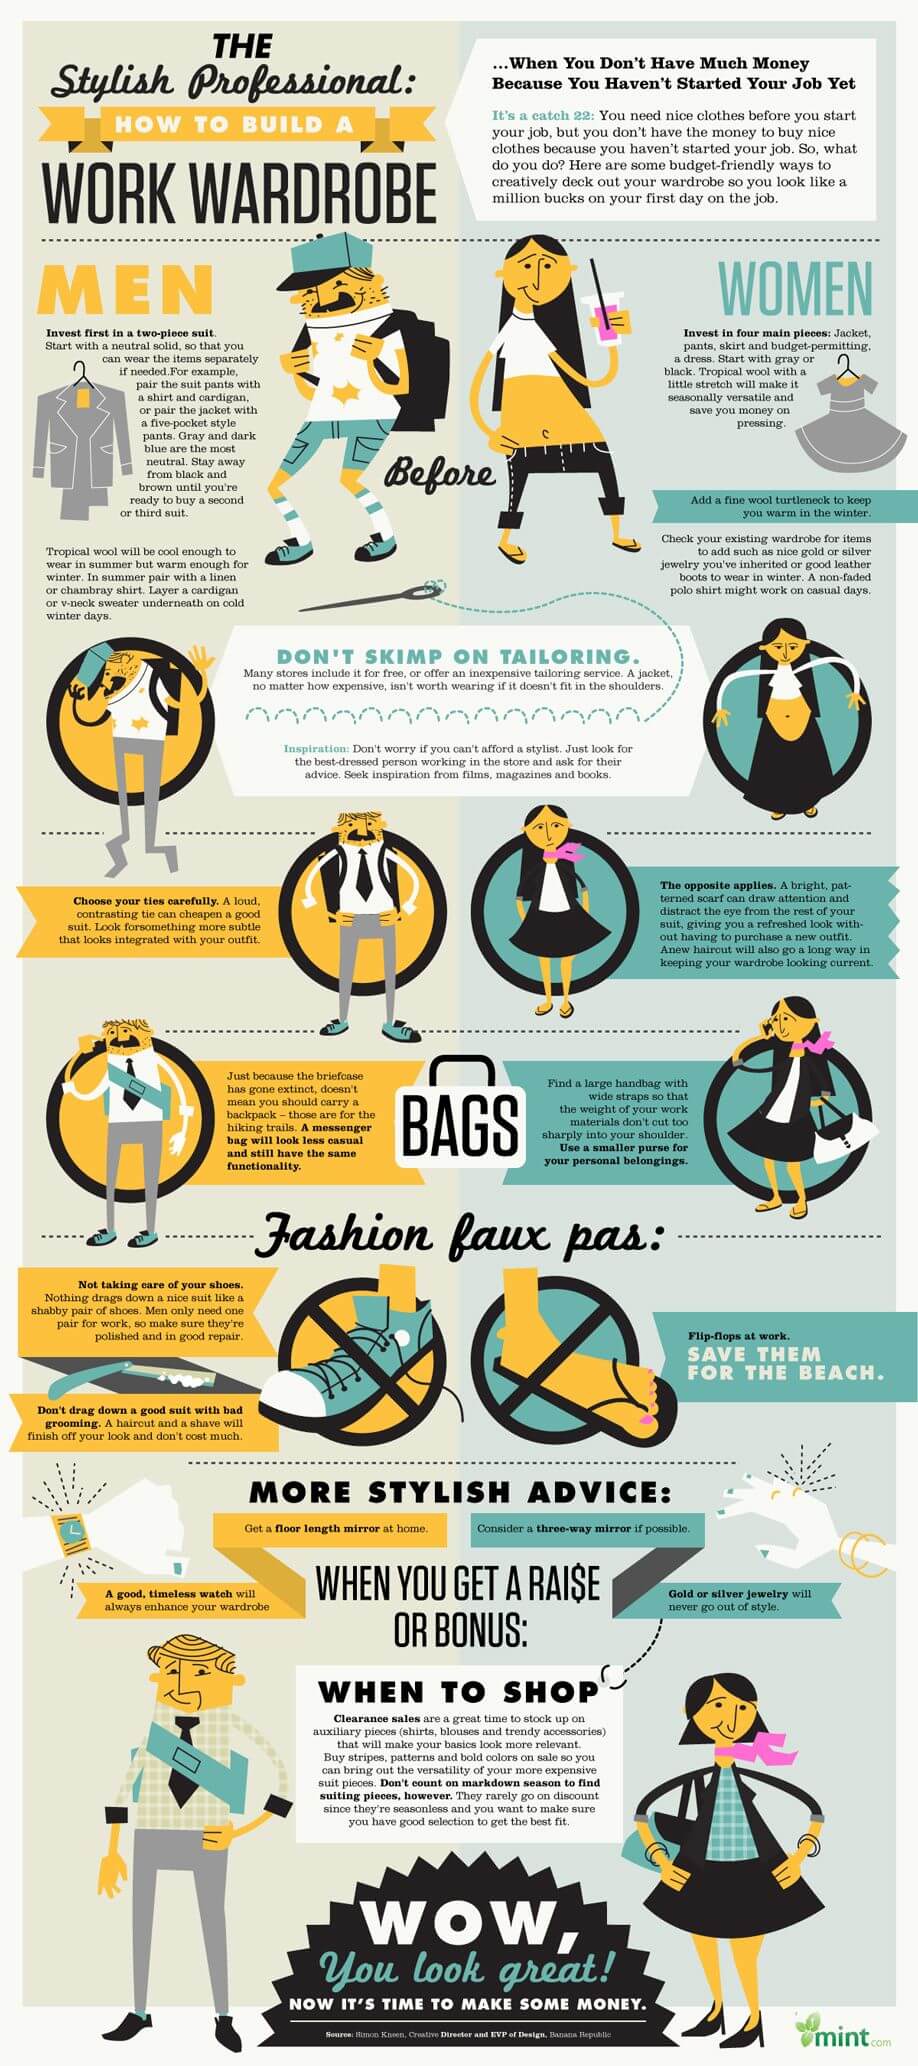 Work Wardrobe | Daily Infographic